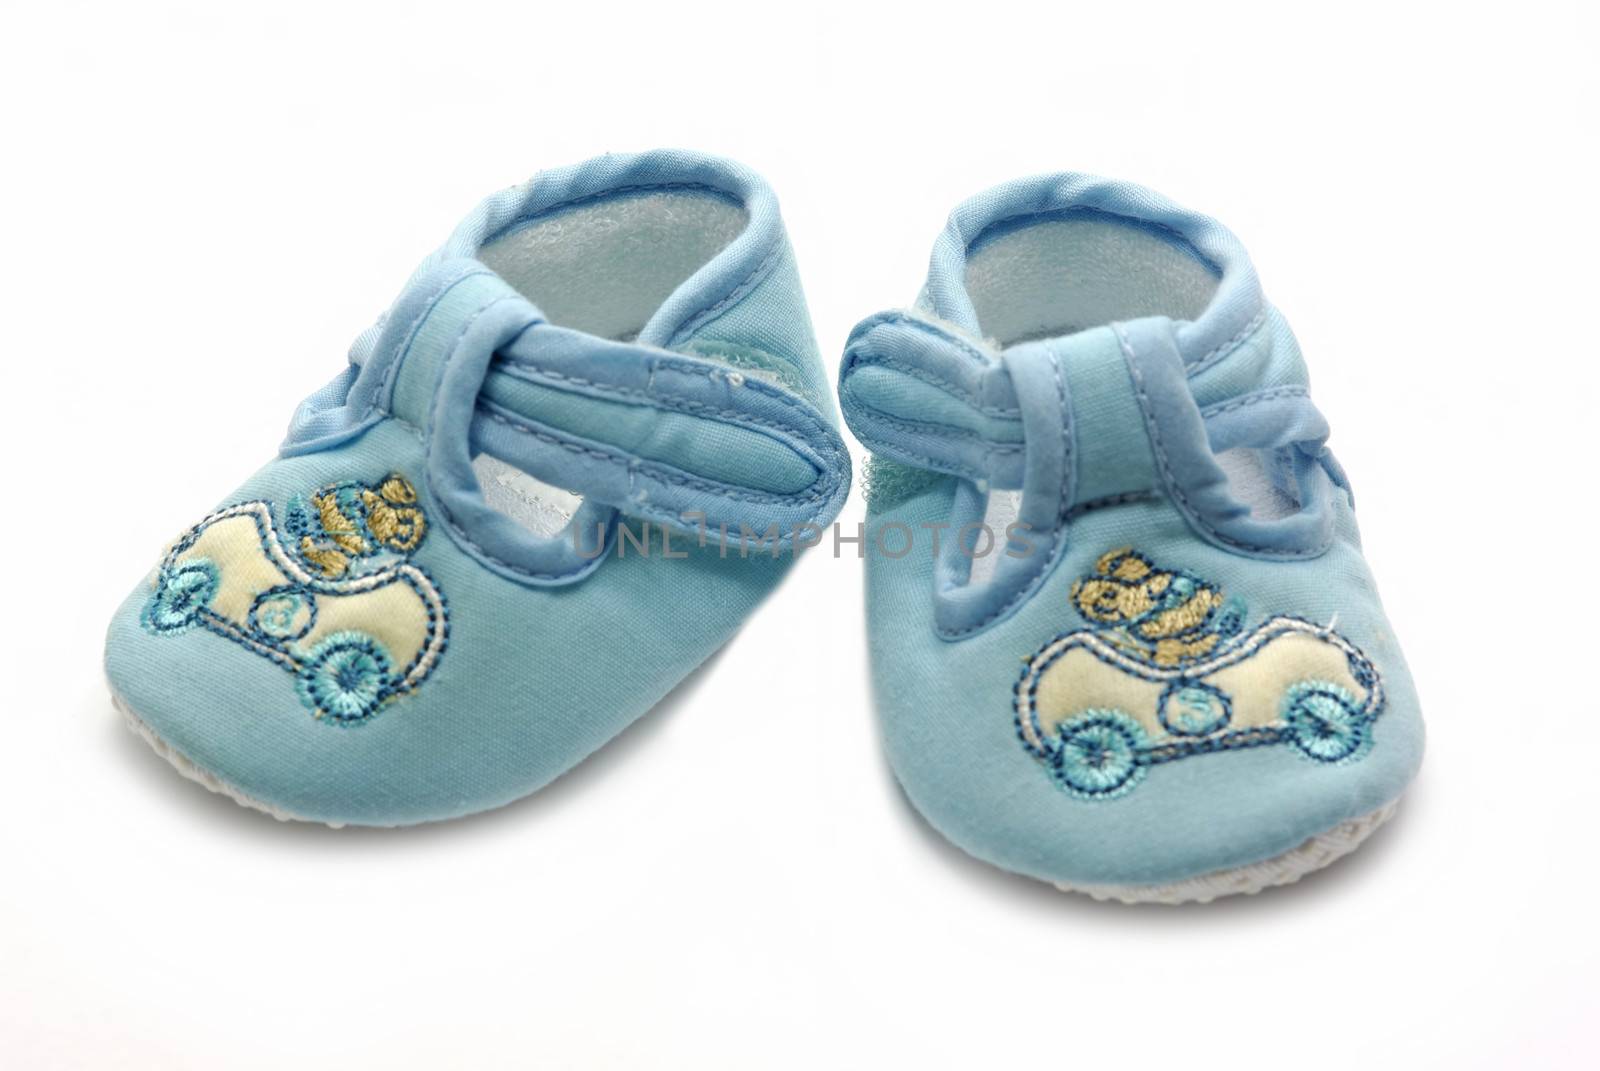 Newborn shoe by savcoco